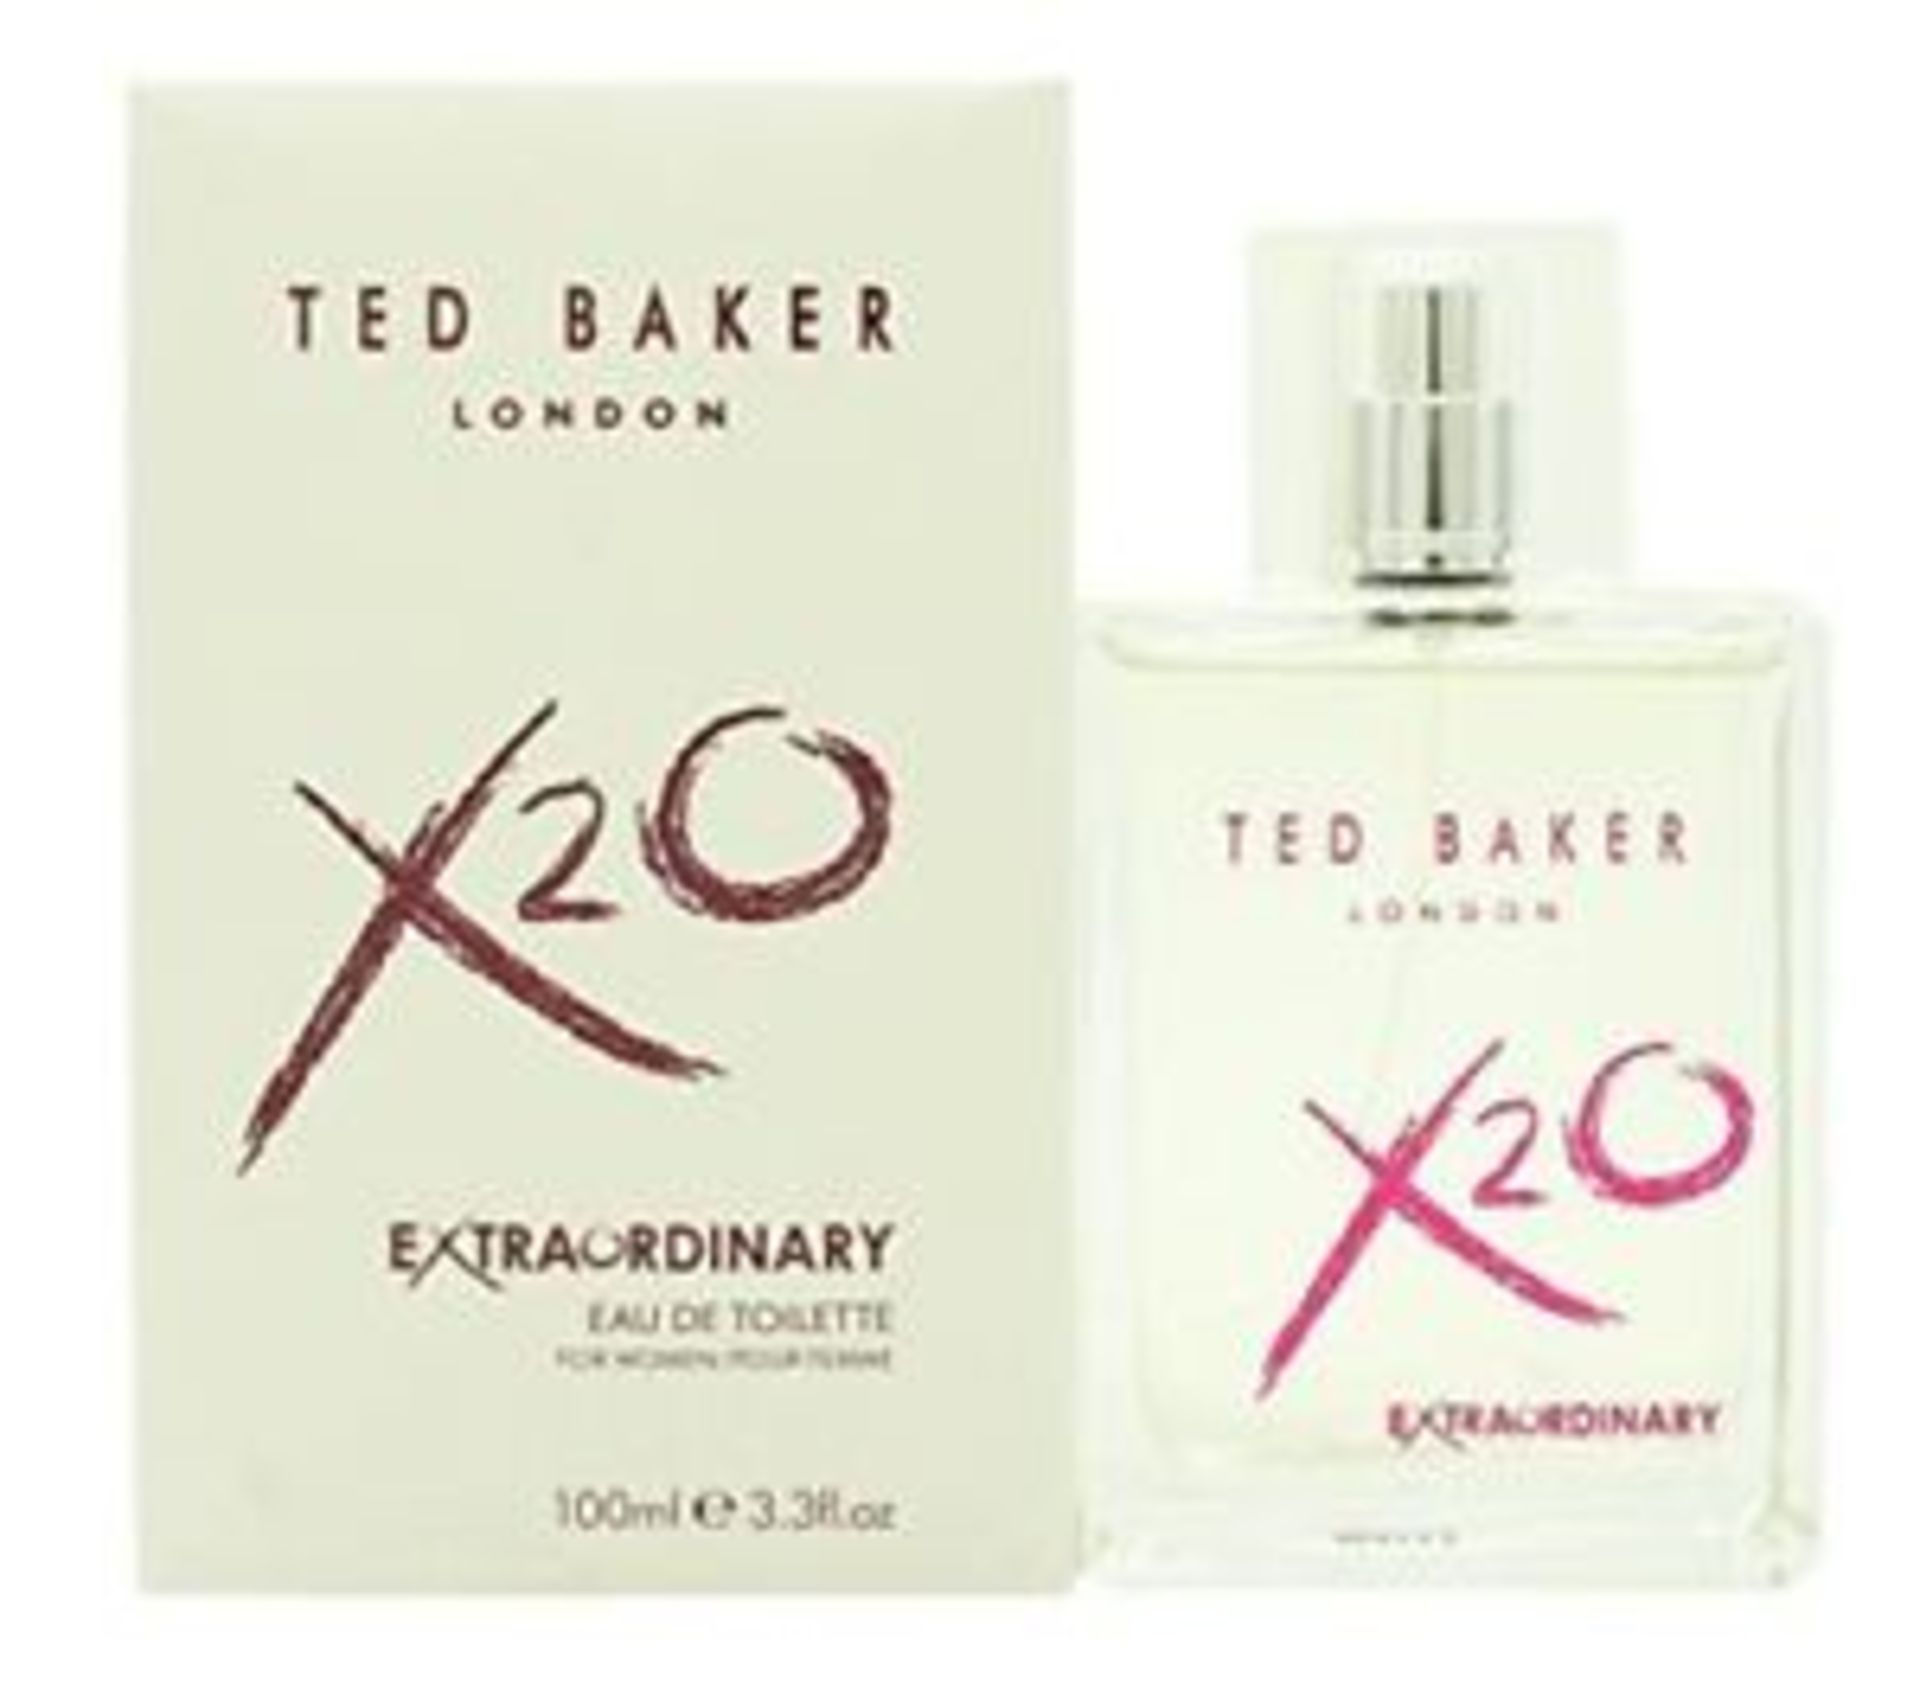 V Brand New 100ml Ted Baker London X20 Extraordinary Eau De Toilette Pour Femme ISP £26.24 (Ebay)